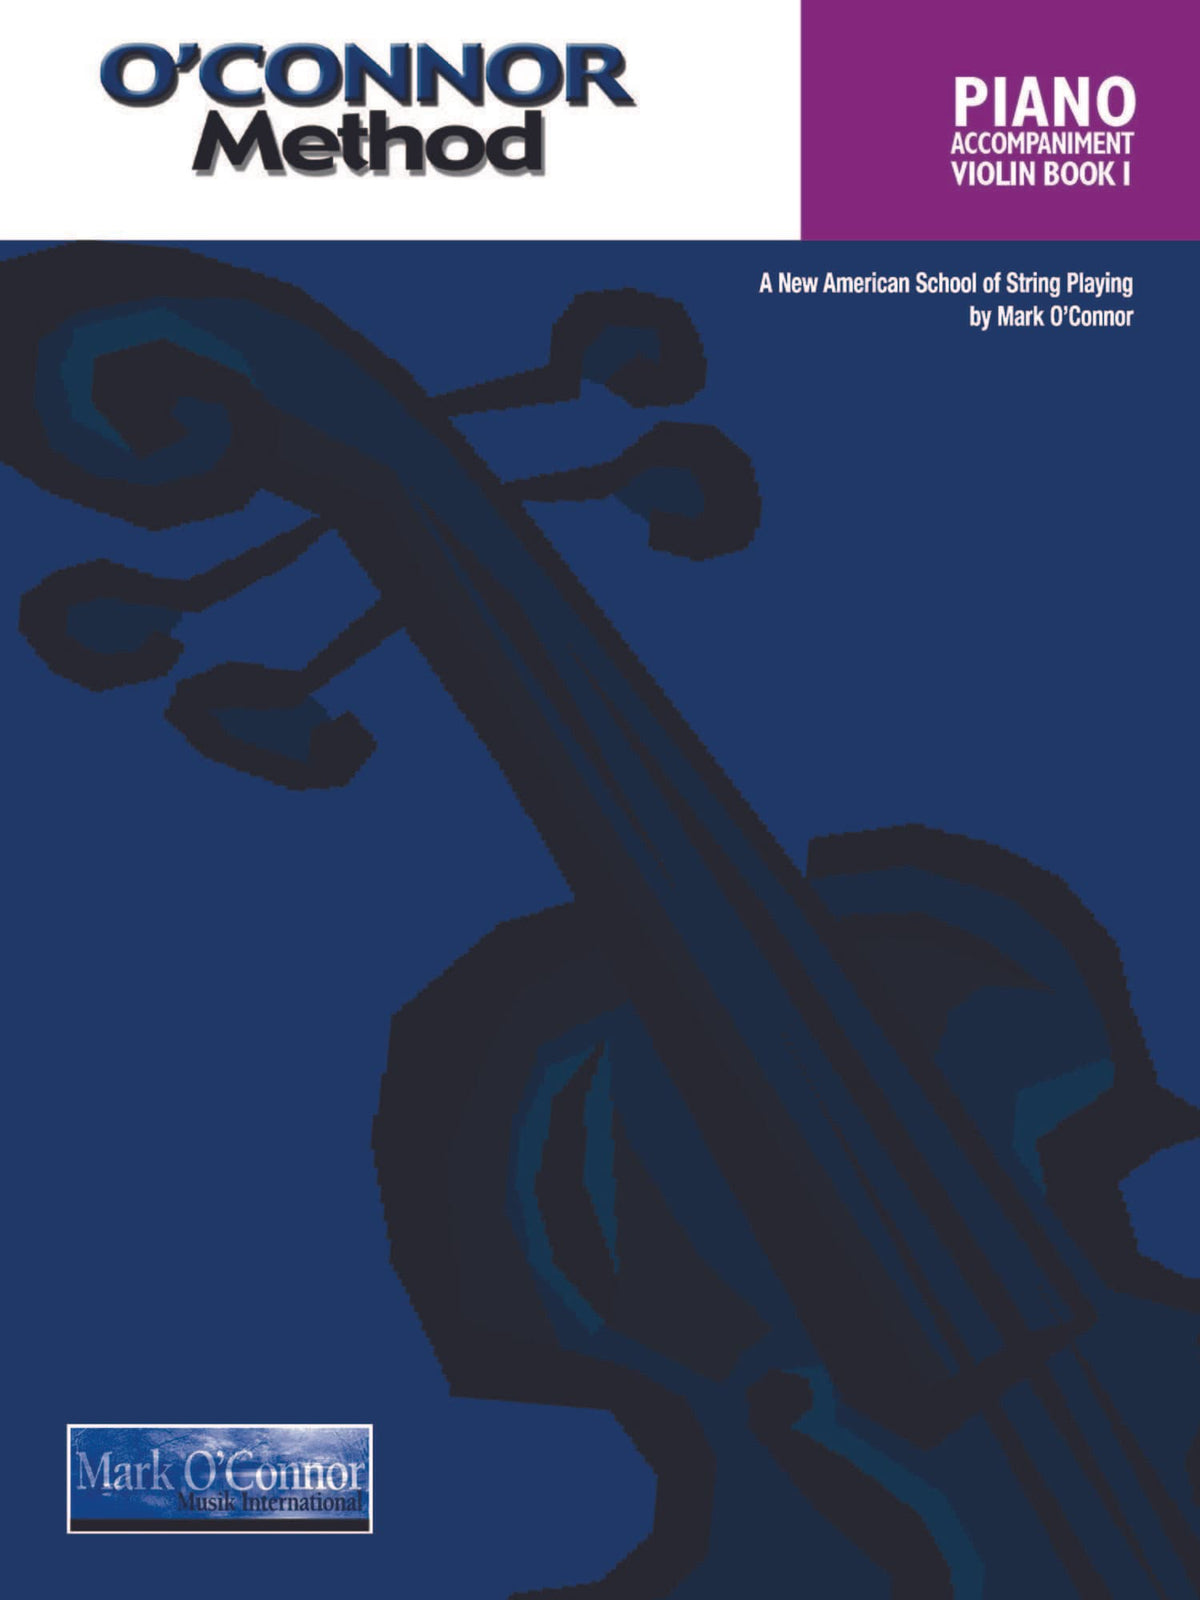 O'Connor Violin Method Book I - Piano Accompaniment - Digital Download